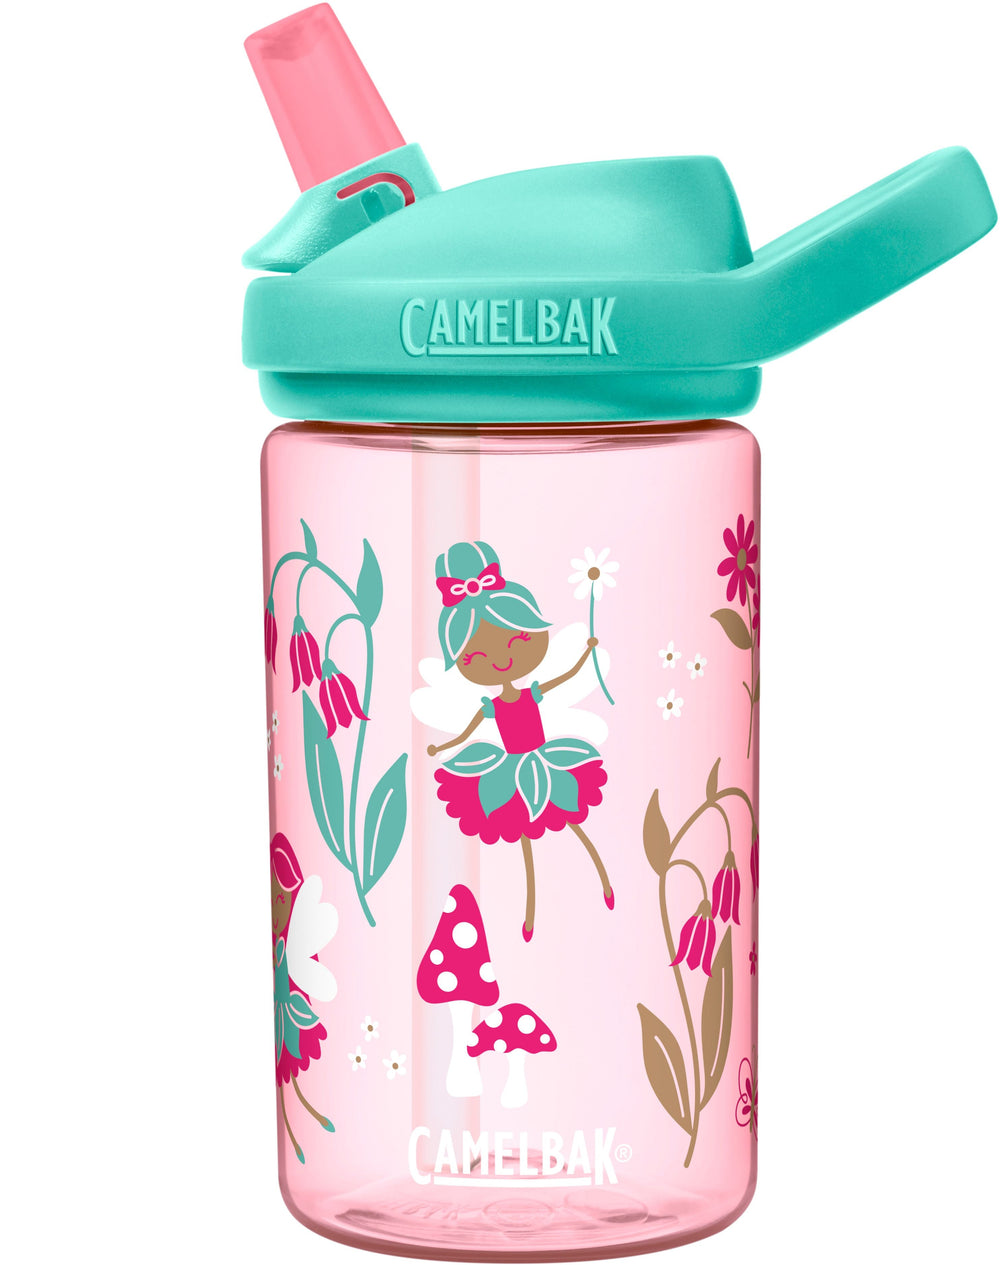 Single Valve, pink) Camelbak Eddy Kids Bottle replacement Bite Valves -  single or multipack options on OnBuy